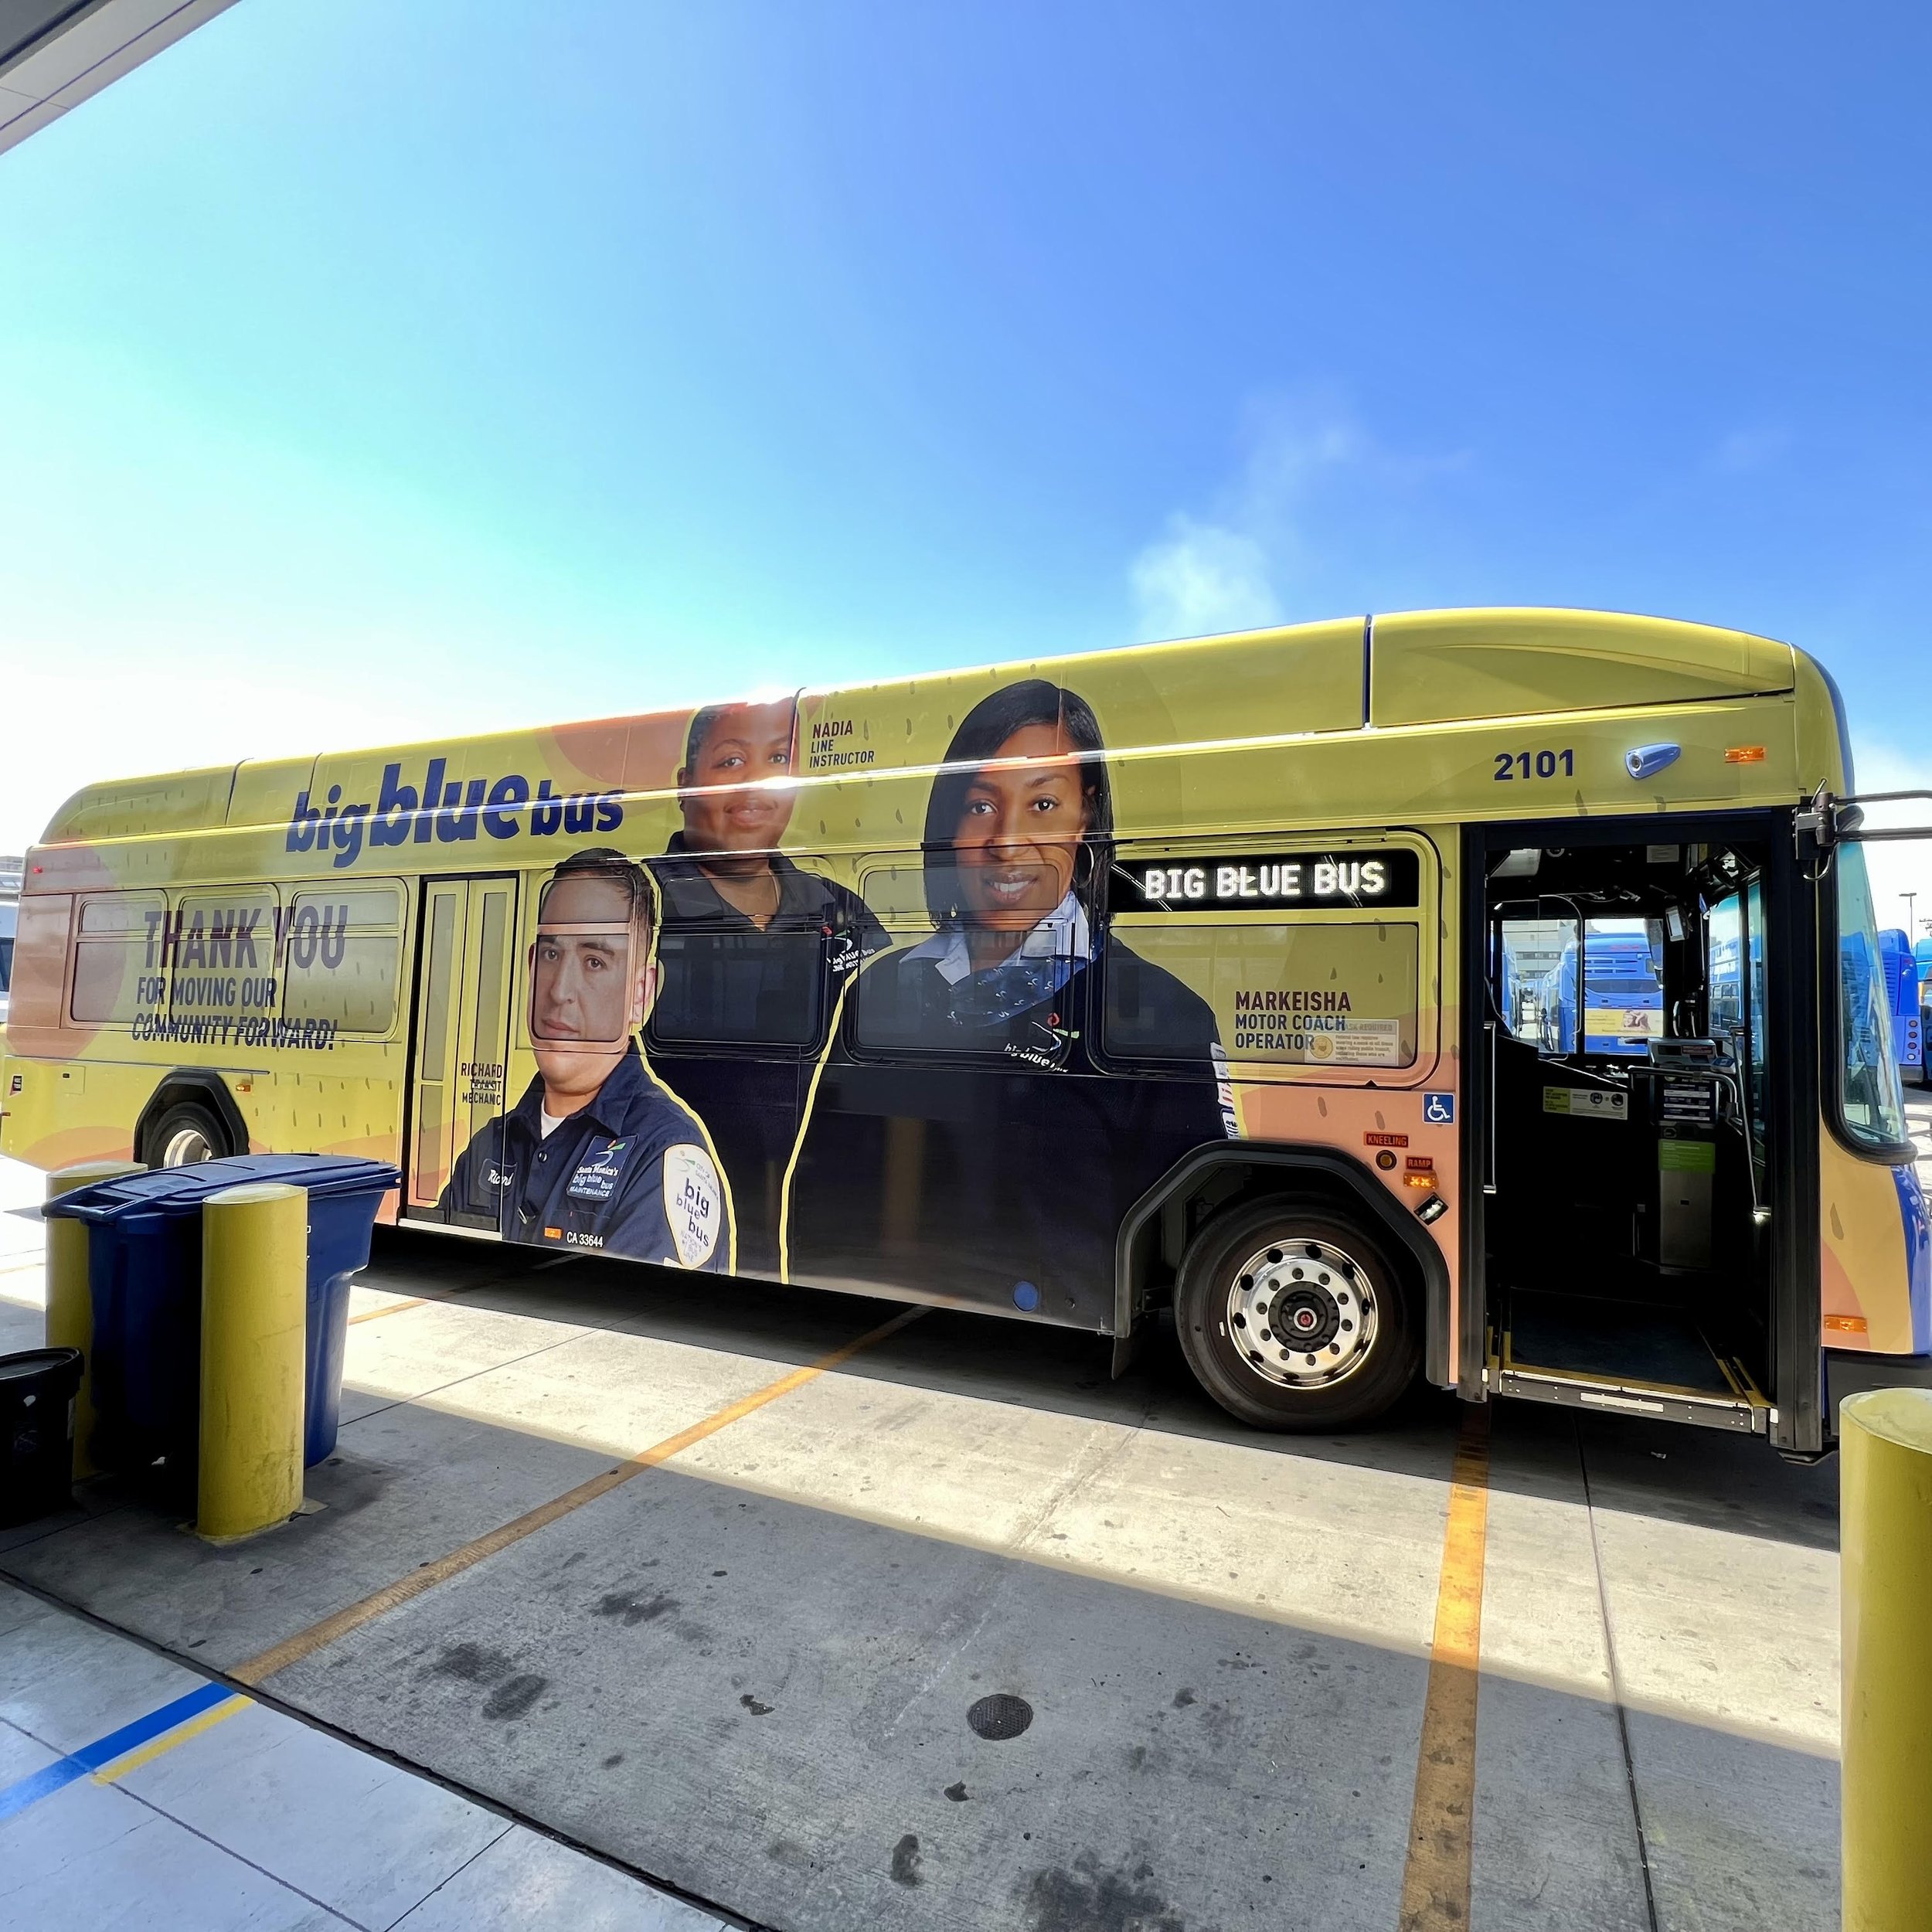 print design - big blue bus - bus wrap/exterior bus advertising